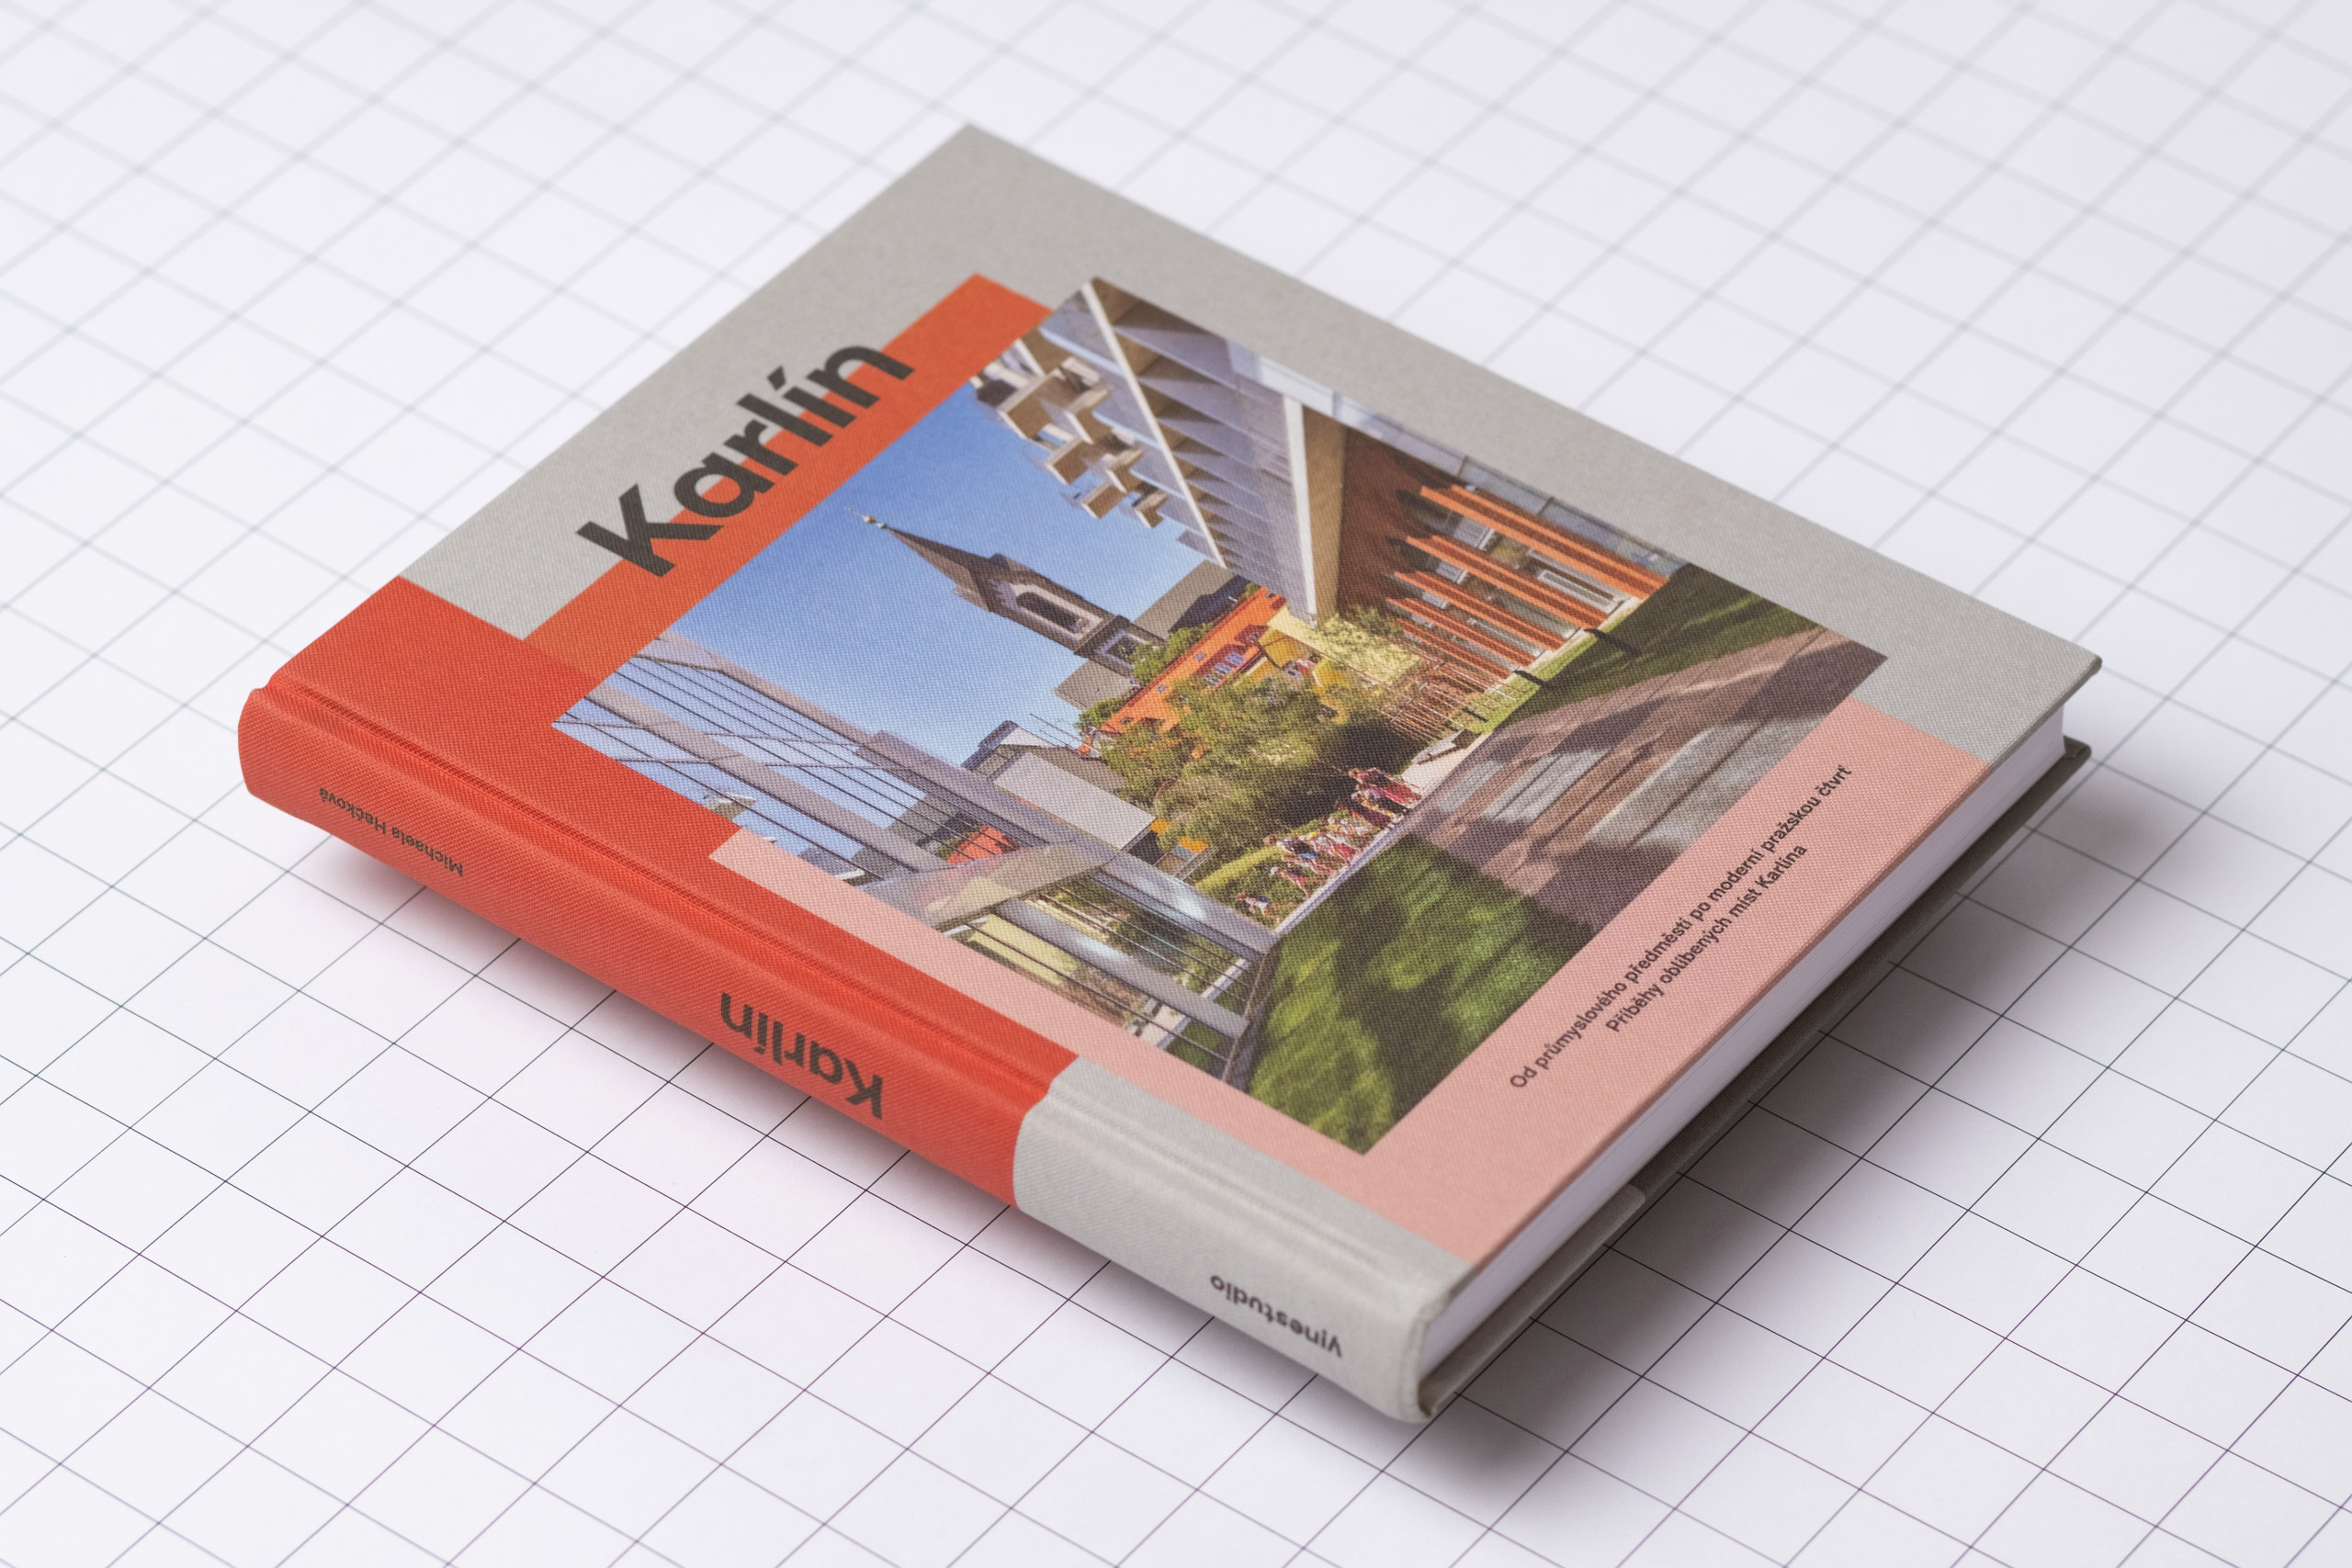 Karlín – a book about one progressive Prague quarter.